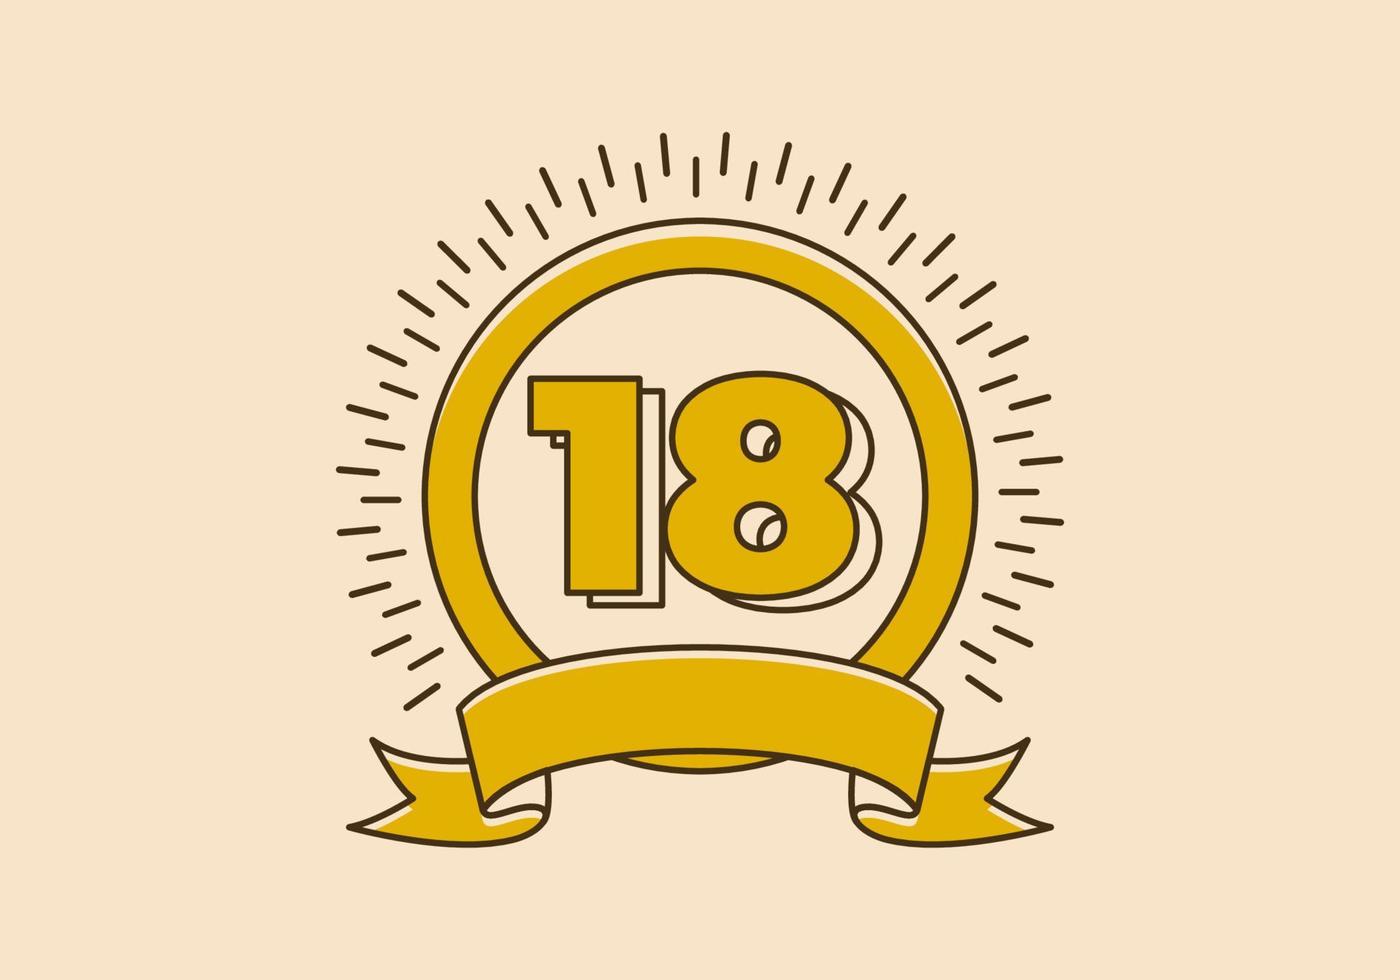 distintivo de círculo amarelo vintage com o número 18 nele vetor